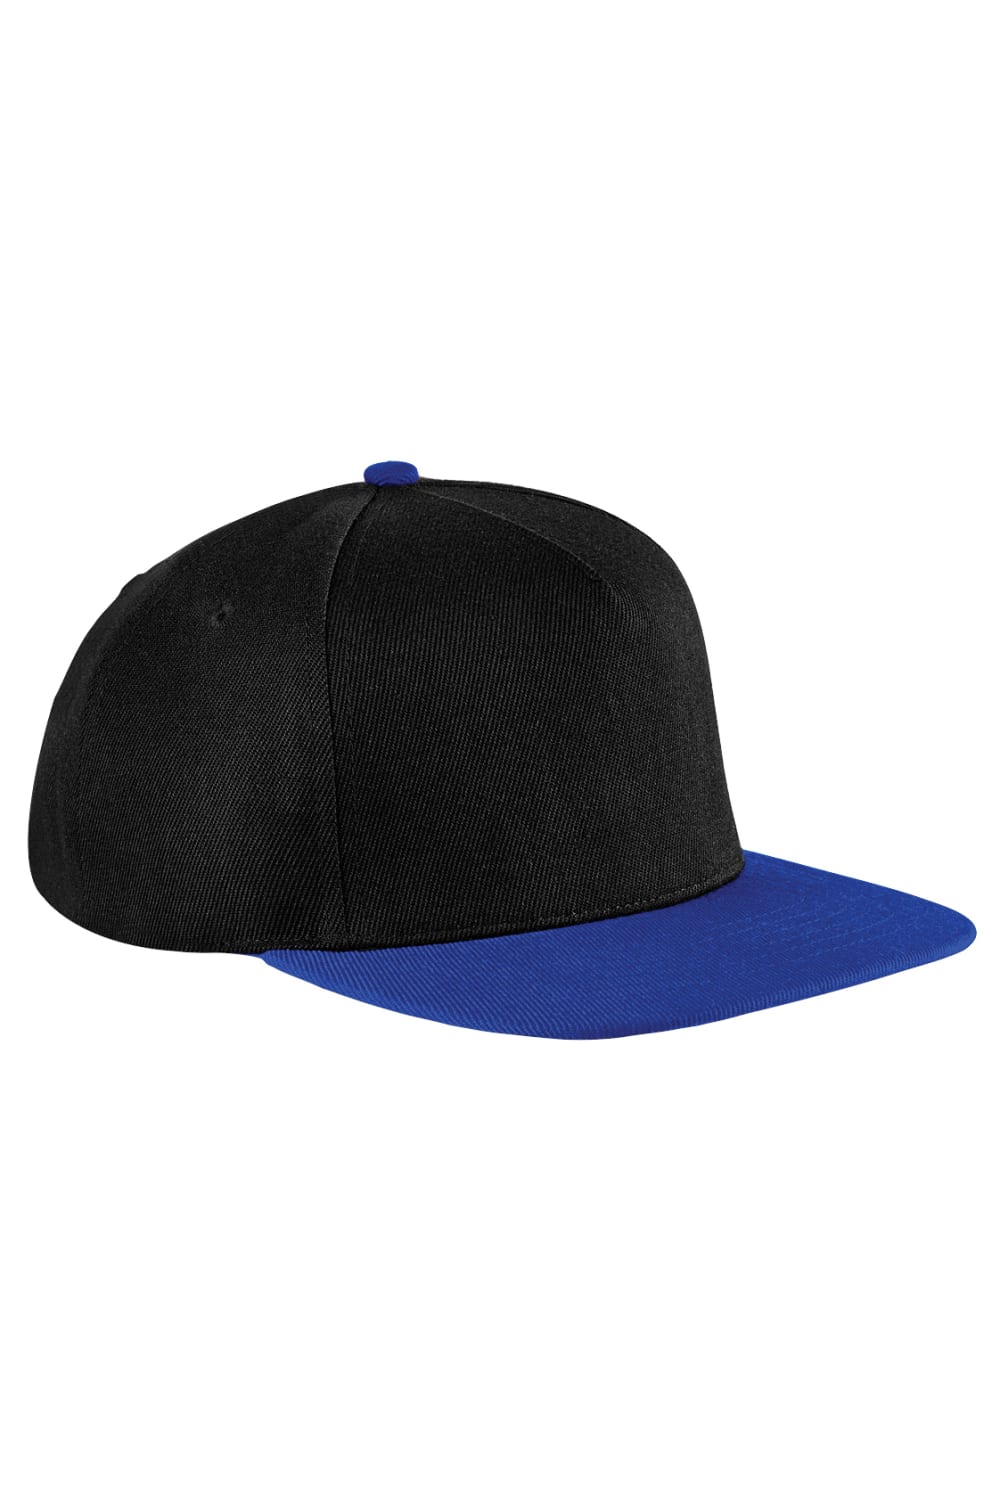 Unisex Original Flat Peak Snapback Cap - Black/Royal Blue